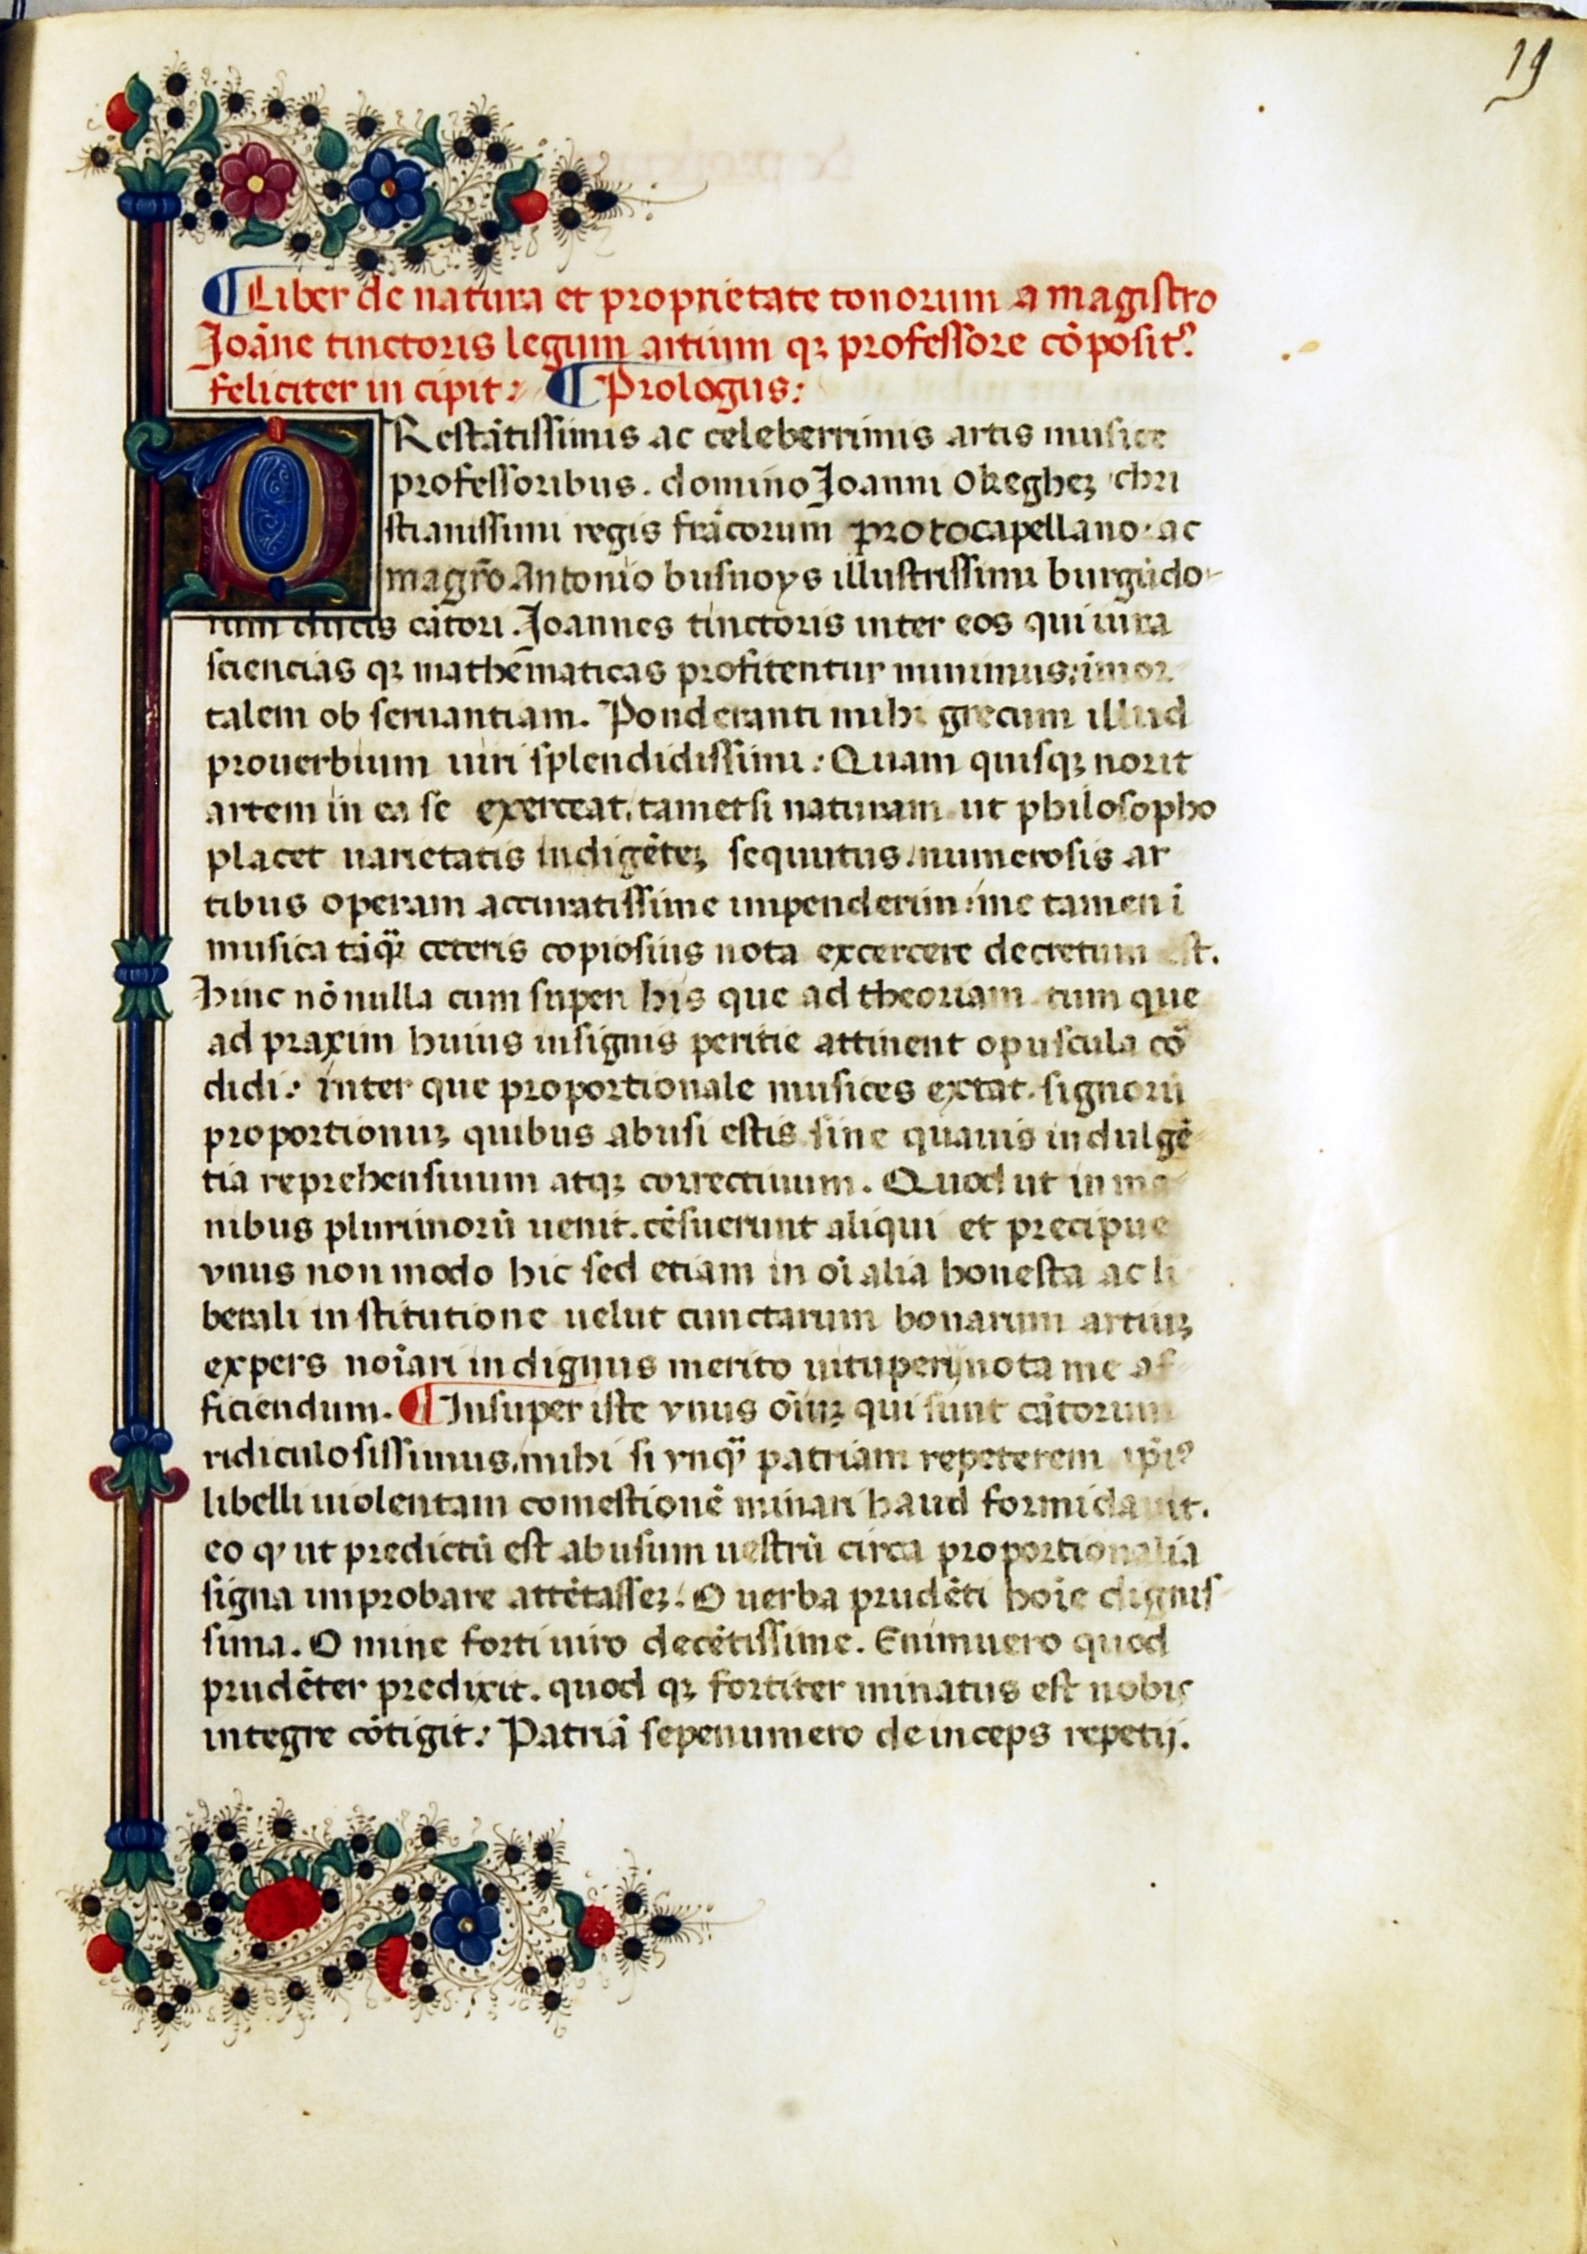 Bologna, Biblioteca Universitaria, MS 2573, fol. 19r. Source: Biblioteca Universitaria, Bologna.